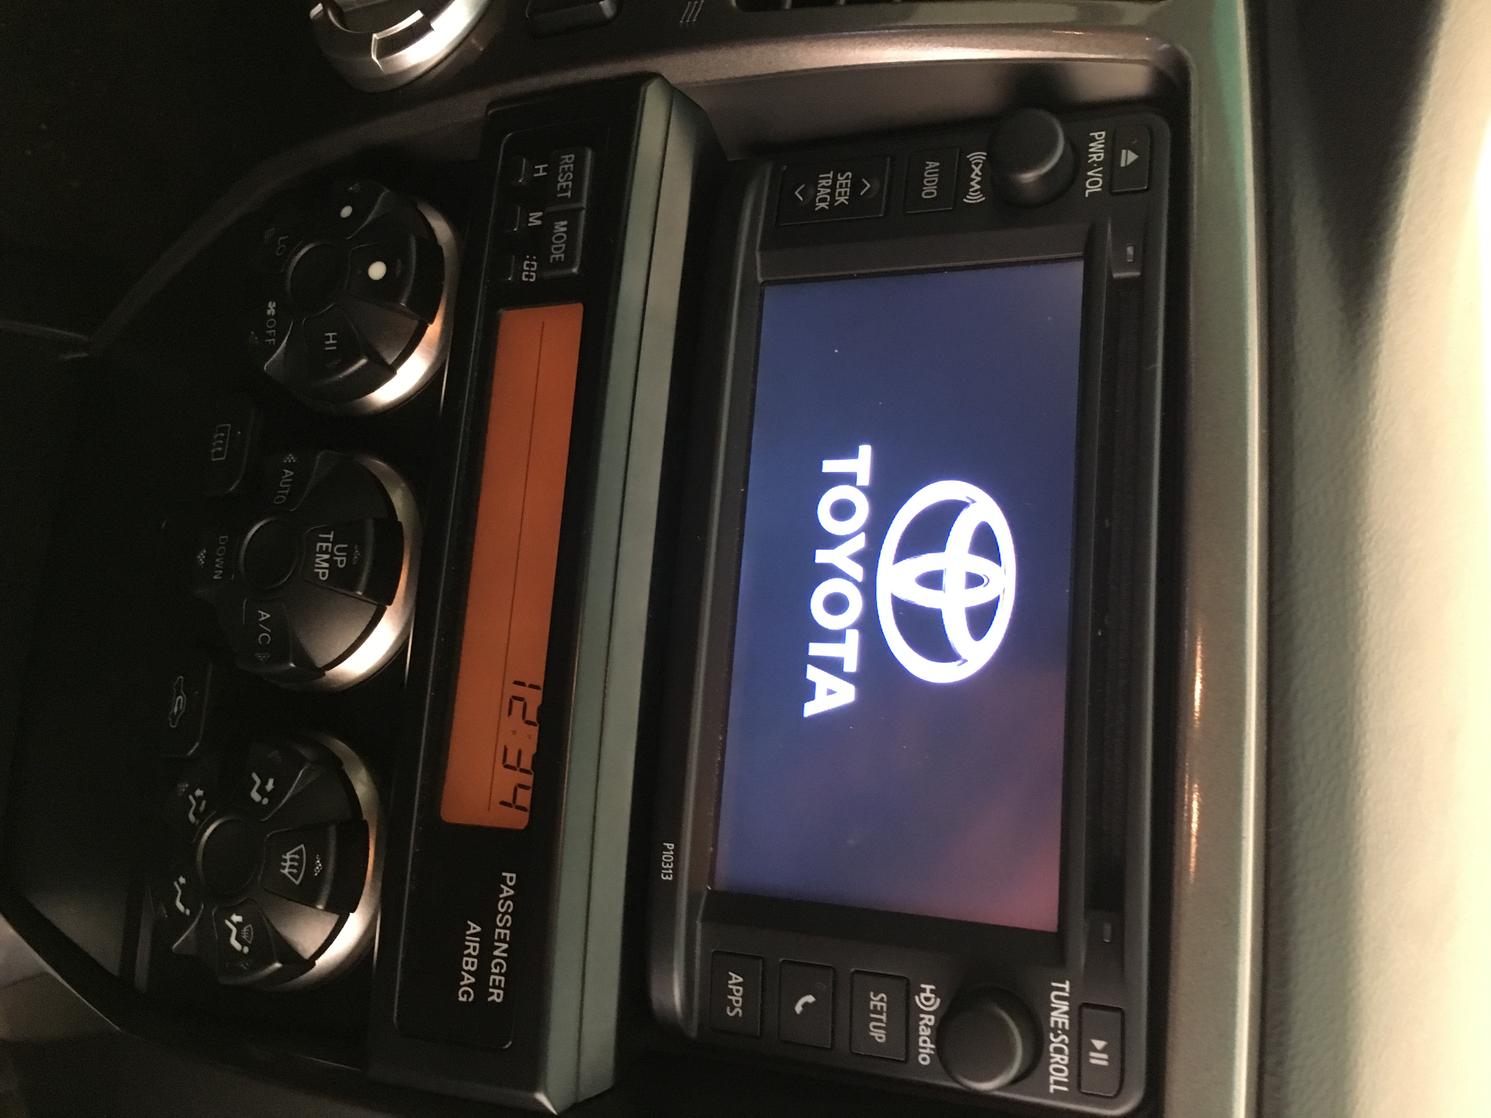 2013 Corolla Entune Radio installed in 2006 4Runner-001-jpg